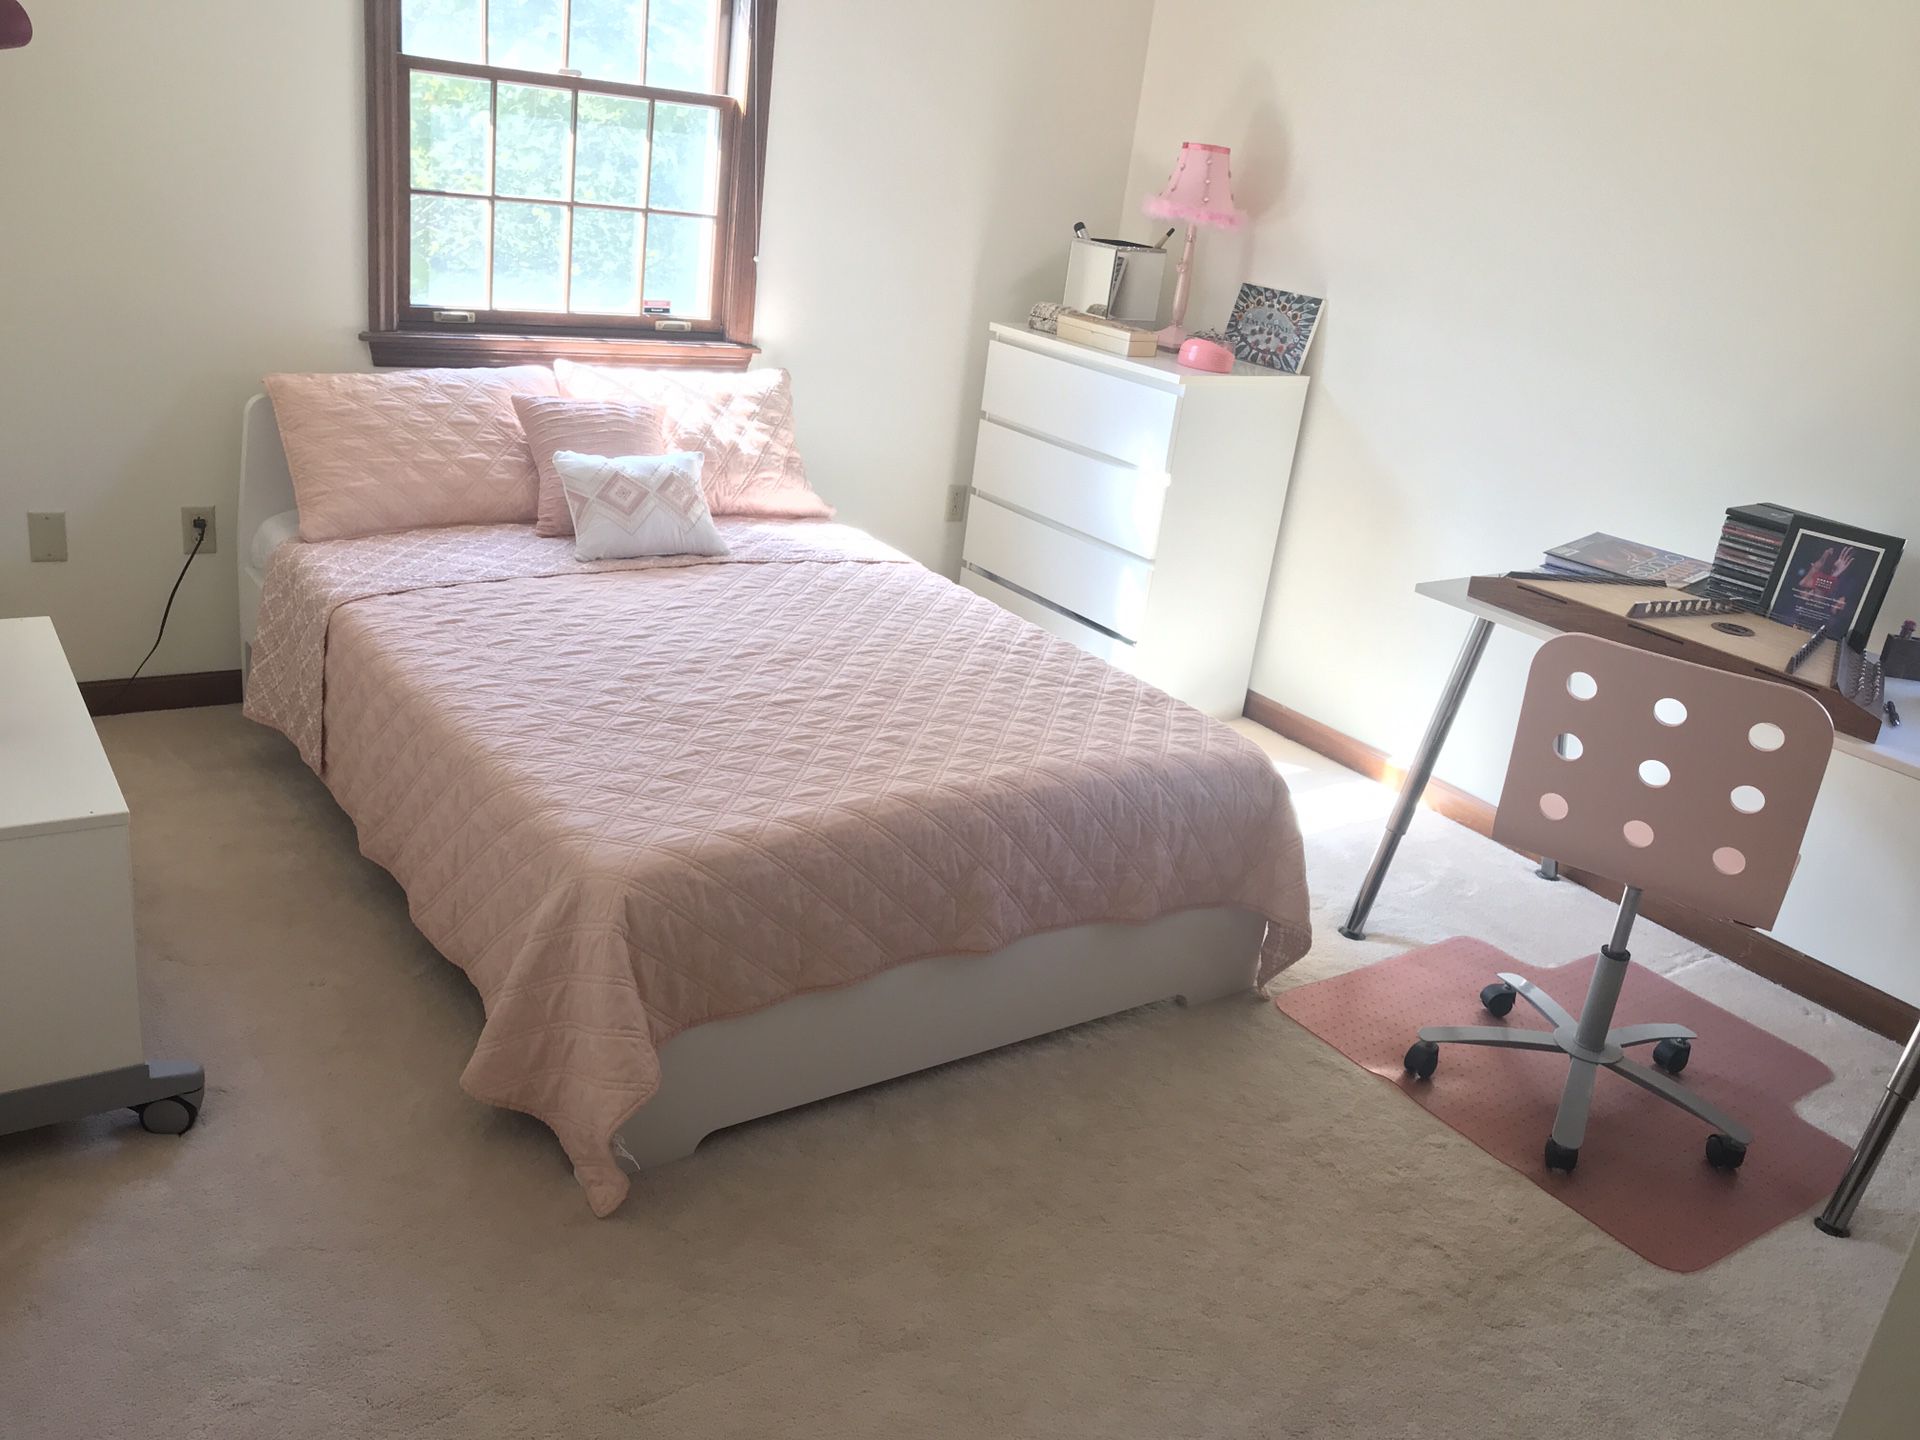 Full size bedroom set: bed frame dresser desk chair and nightstand